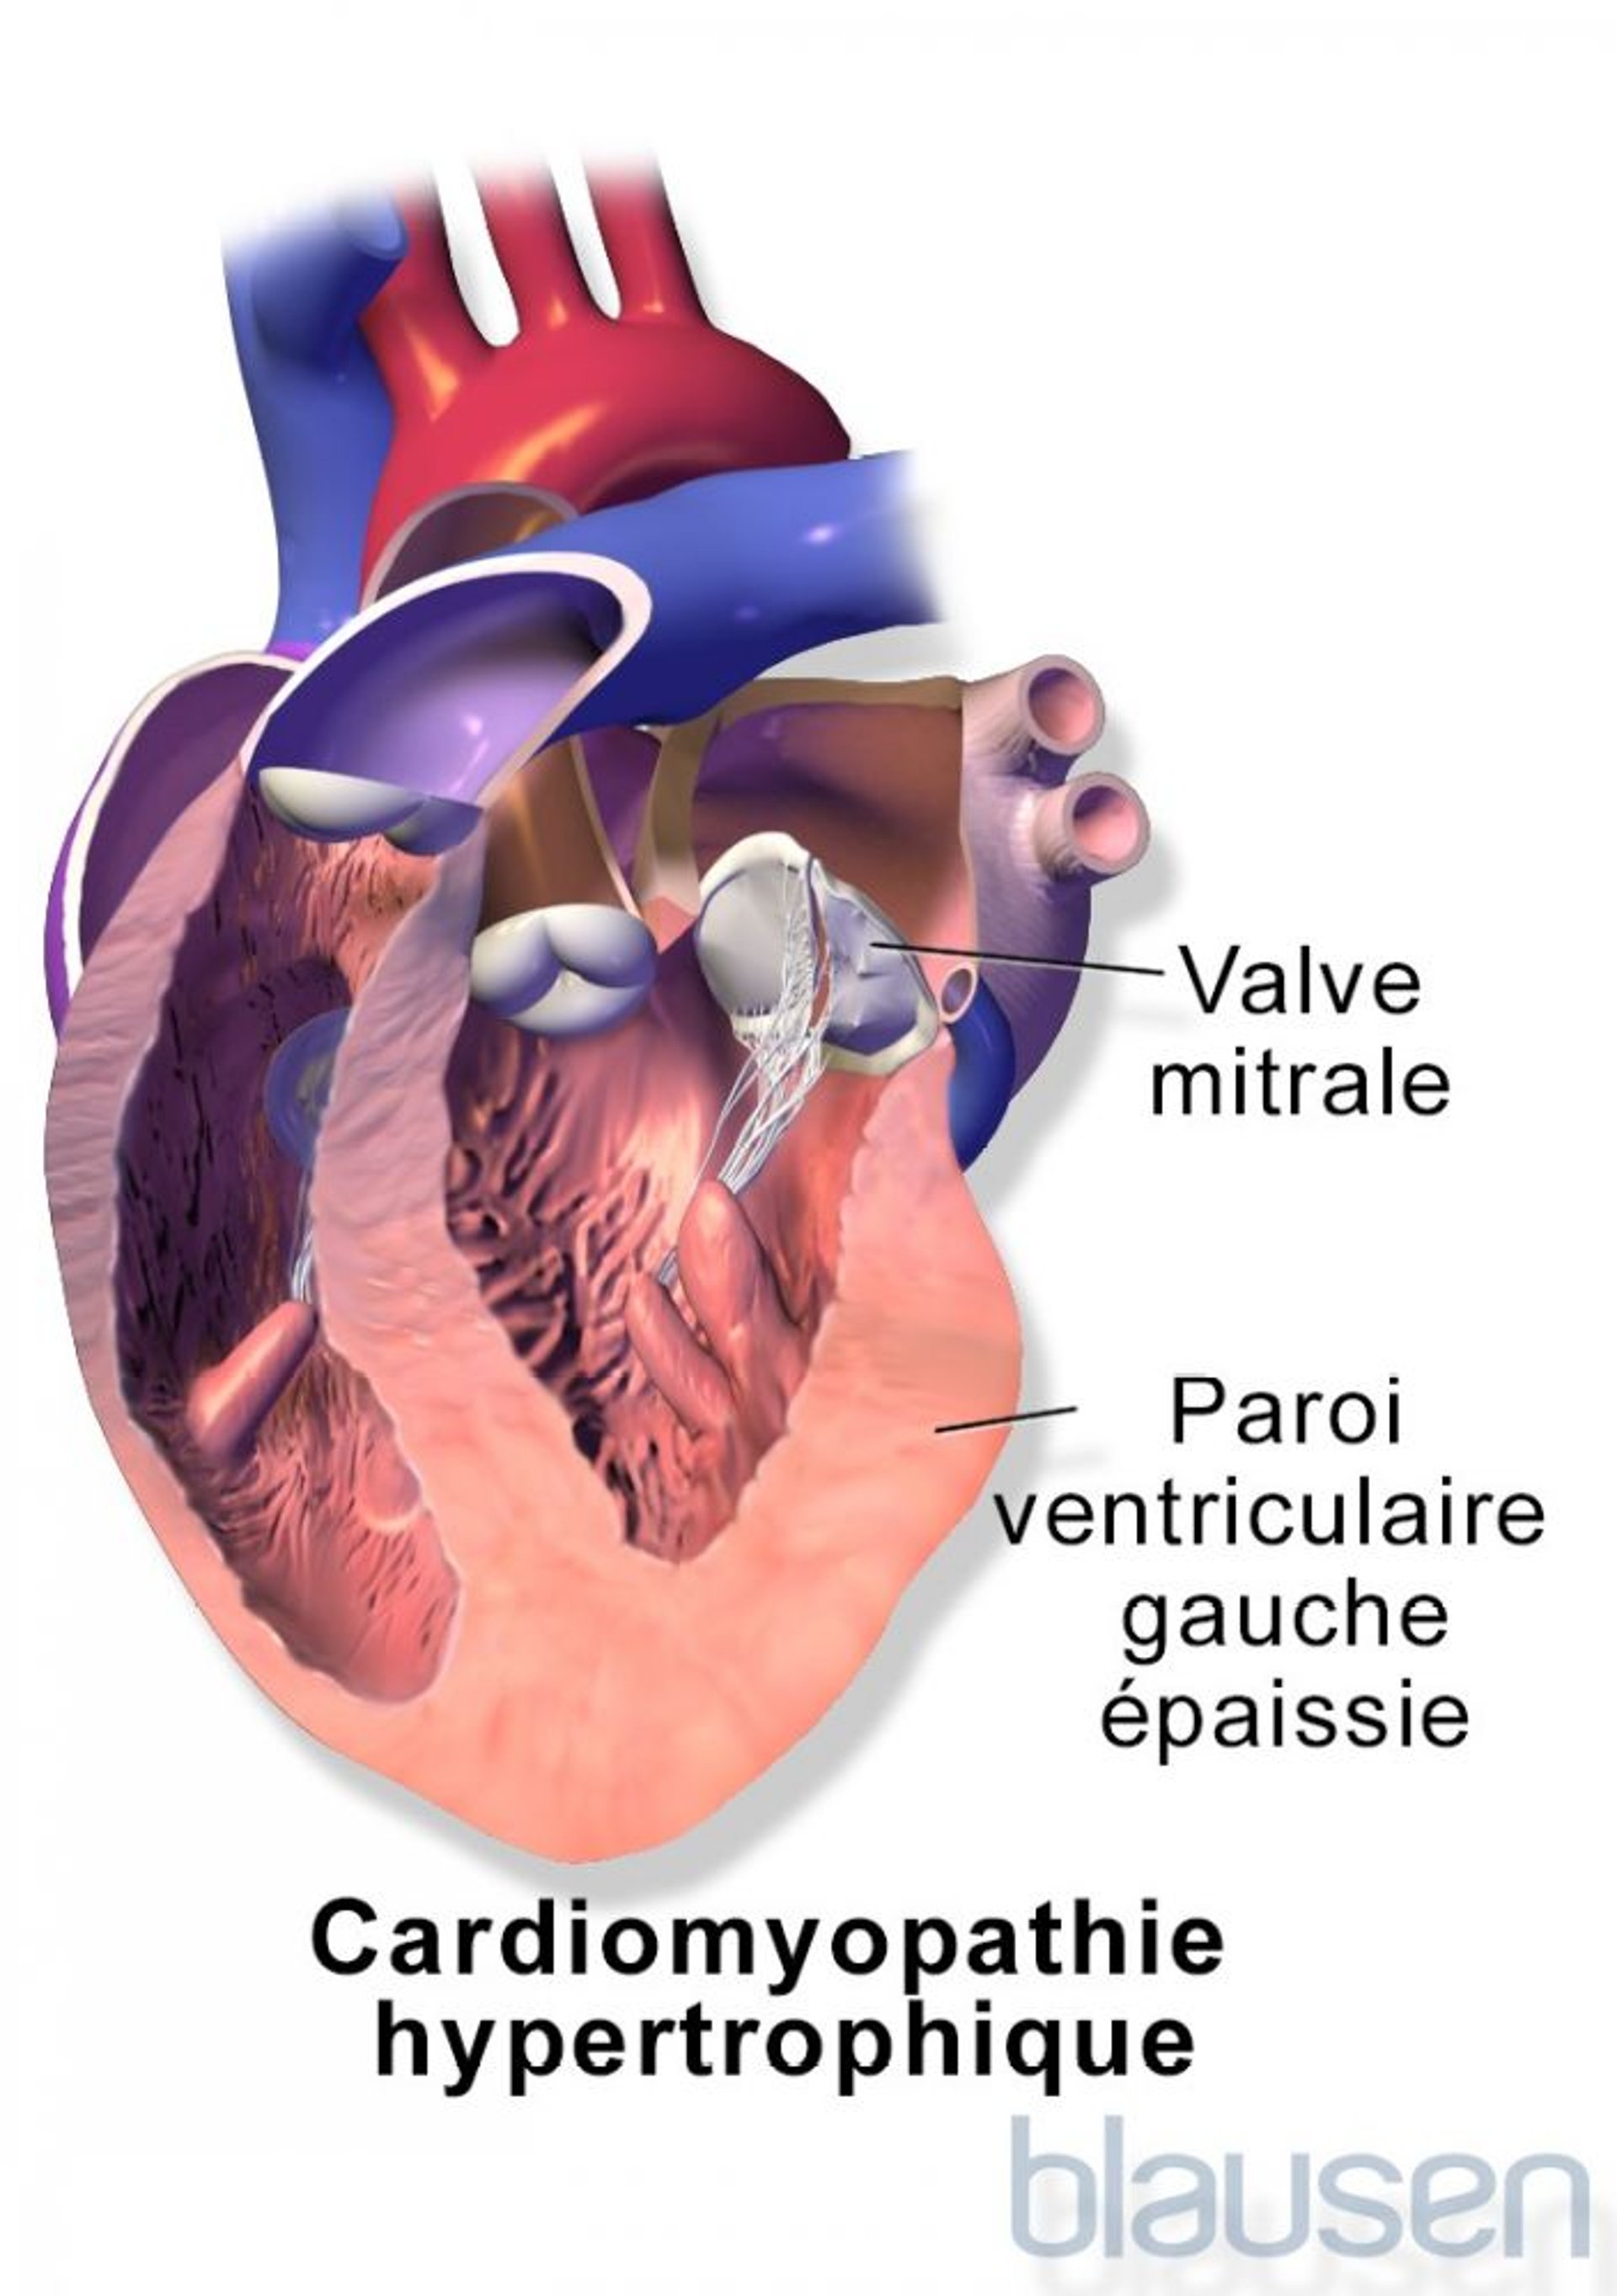 Cardiomyopathie hypertrophique